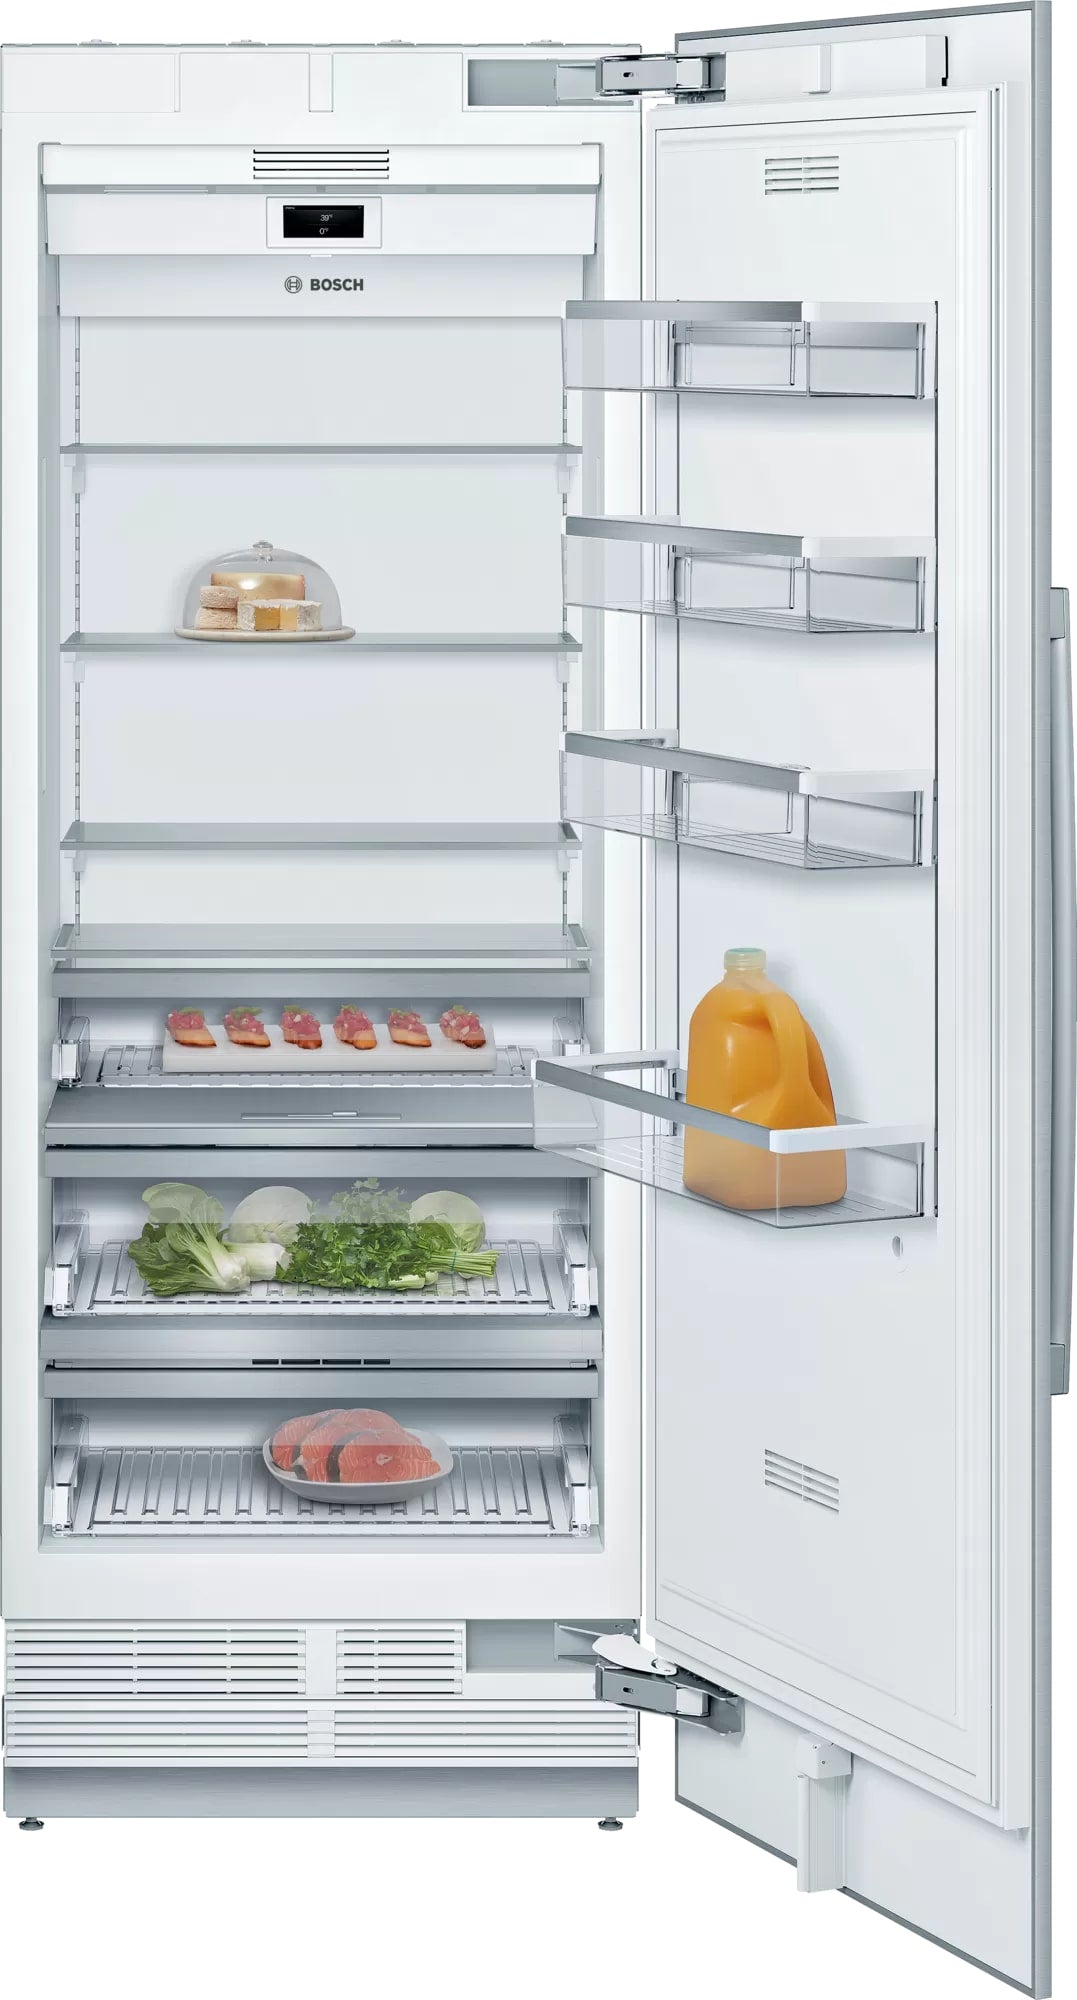 Bosch - 29.75 Inch 16.8 cu. ft Built In / Integrated All Fridge Refrigerator in Panel Ready - B30IR905SP